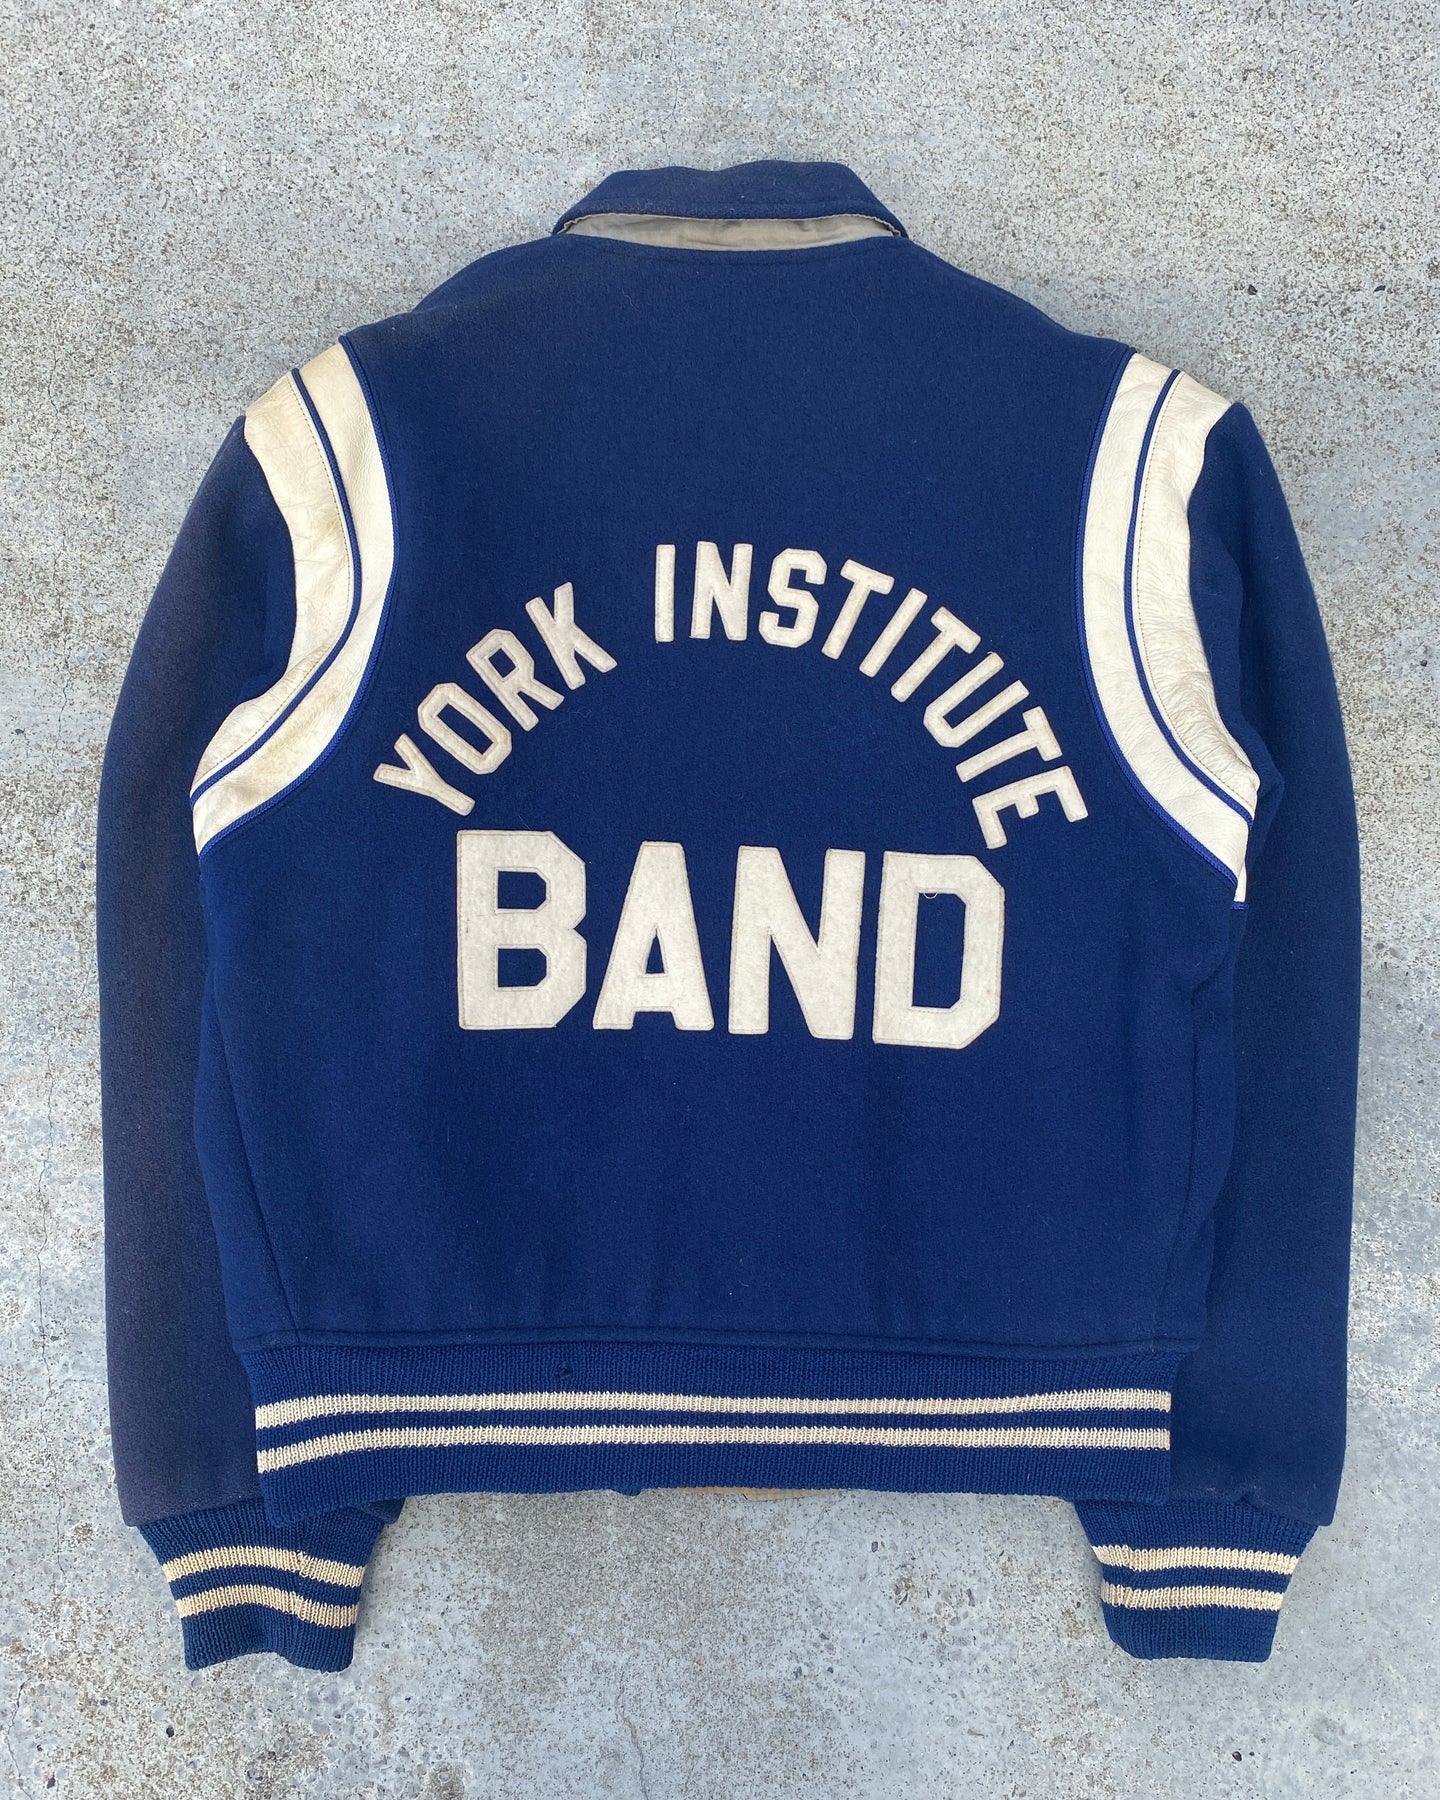 1950s/1960s York Institute Band Varsity Jacket - Size Medium